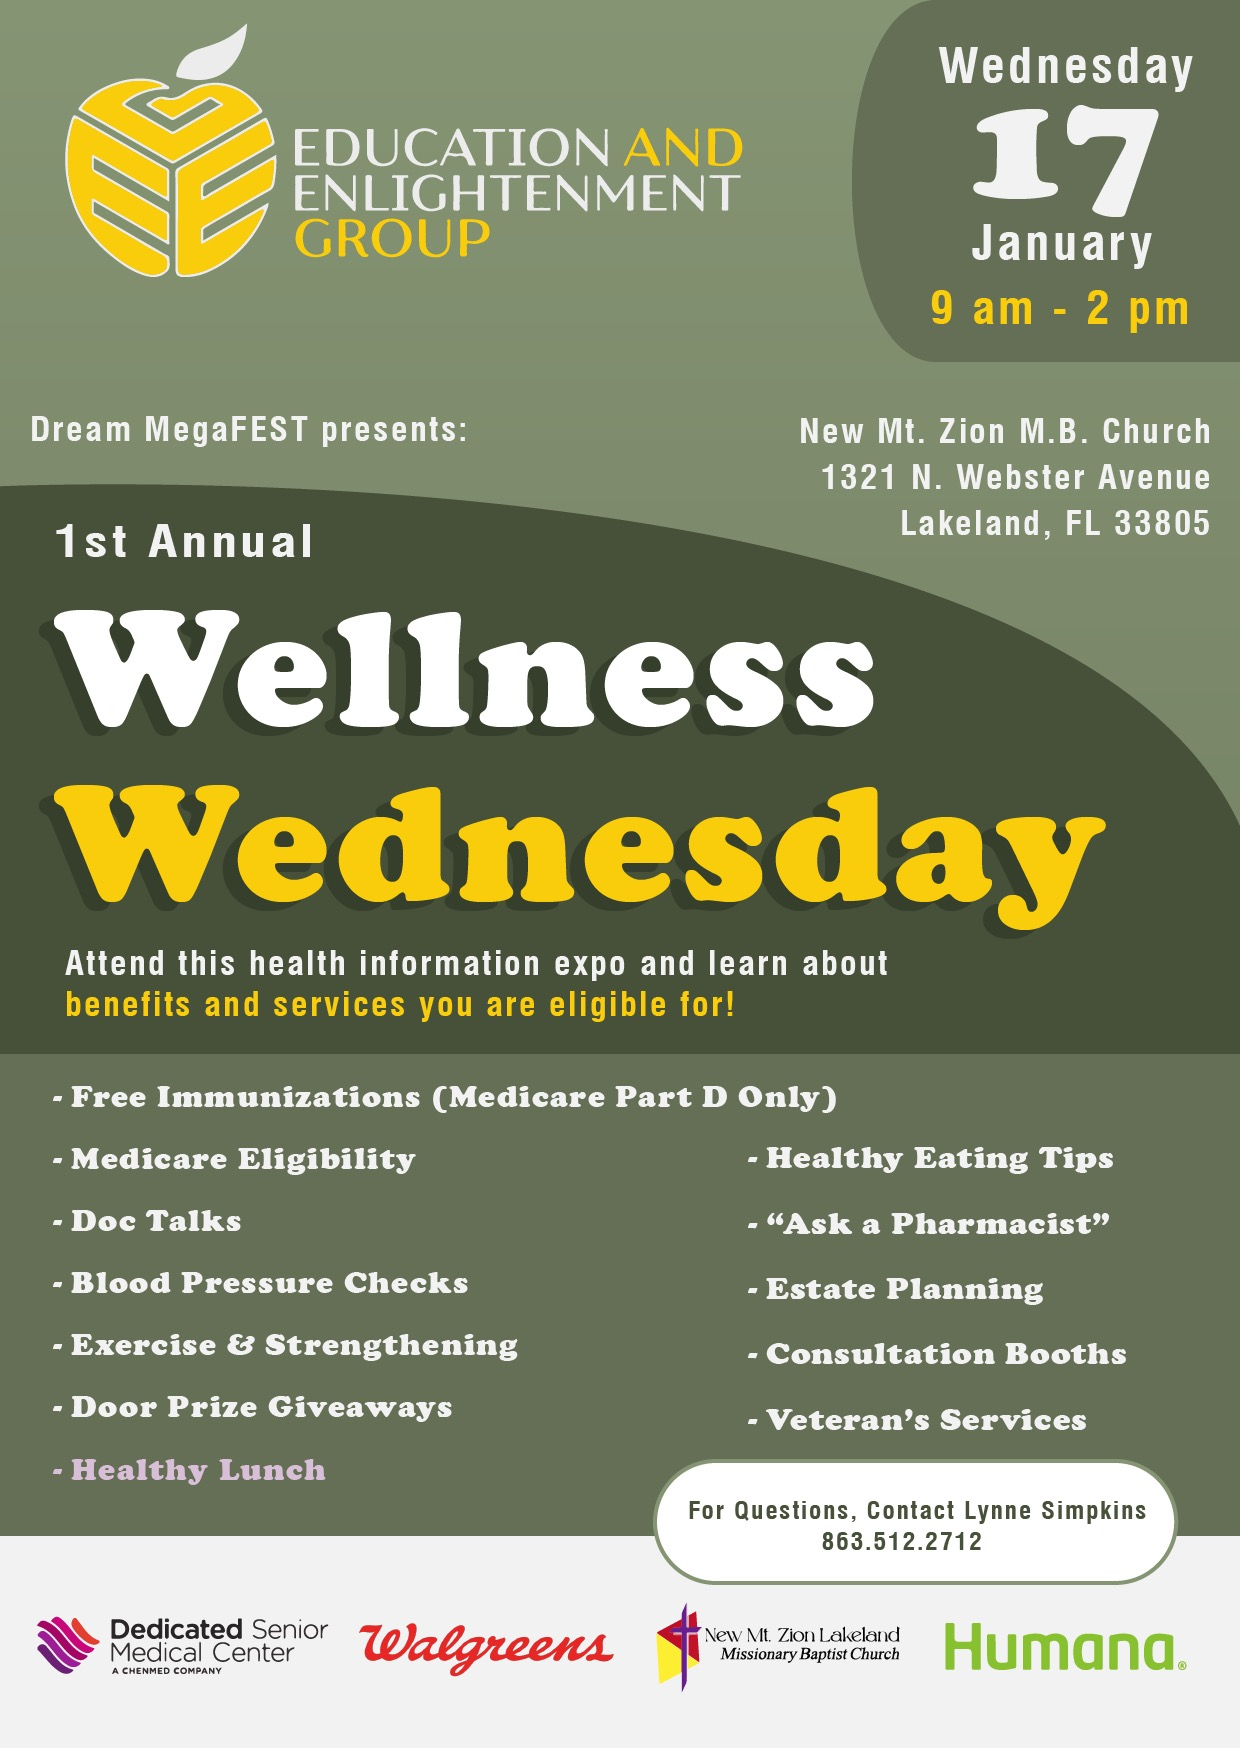 Wellness Wednesday @ New Mt. Zion M.B. Church